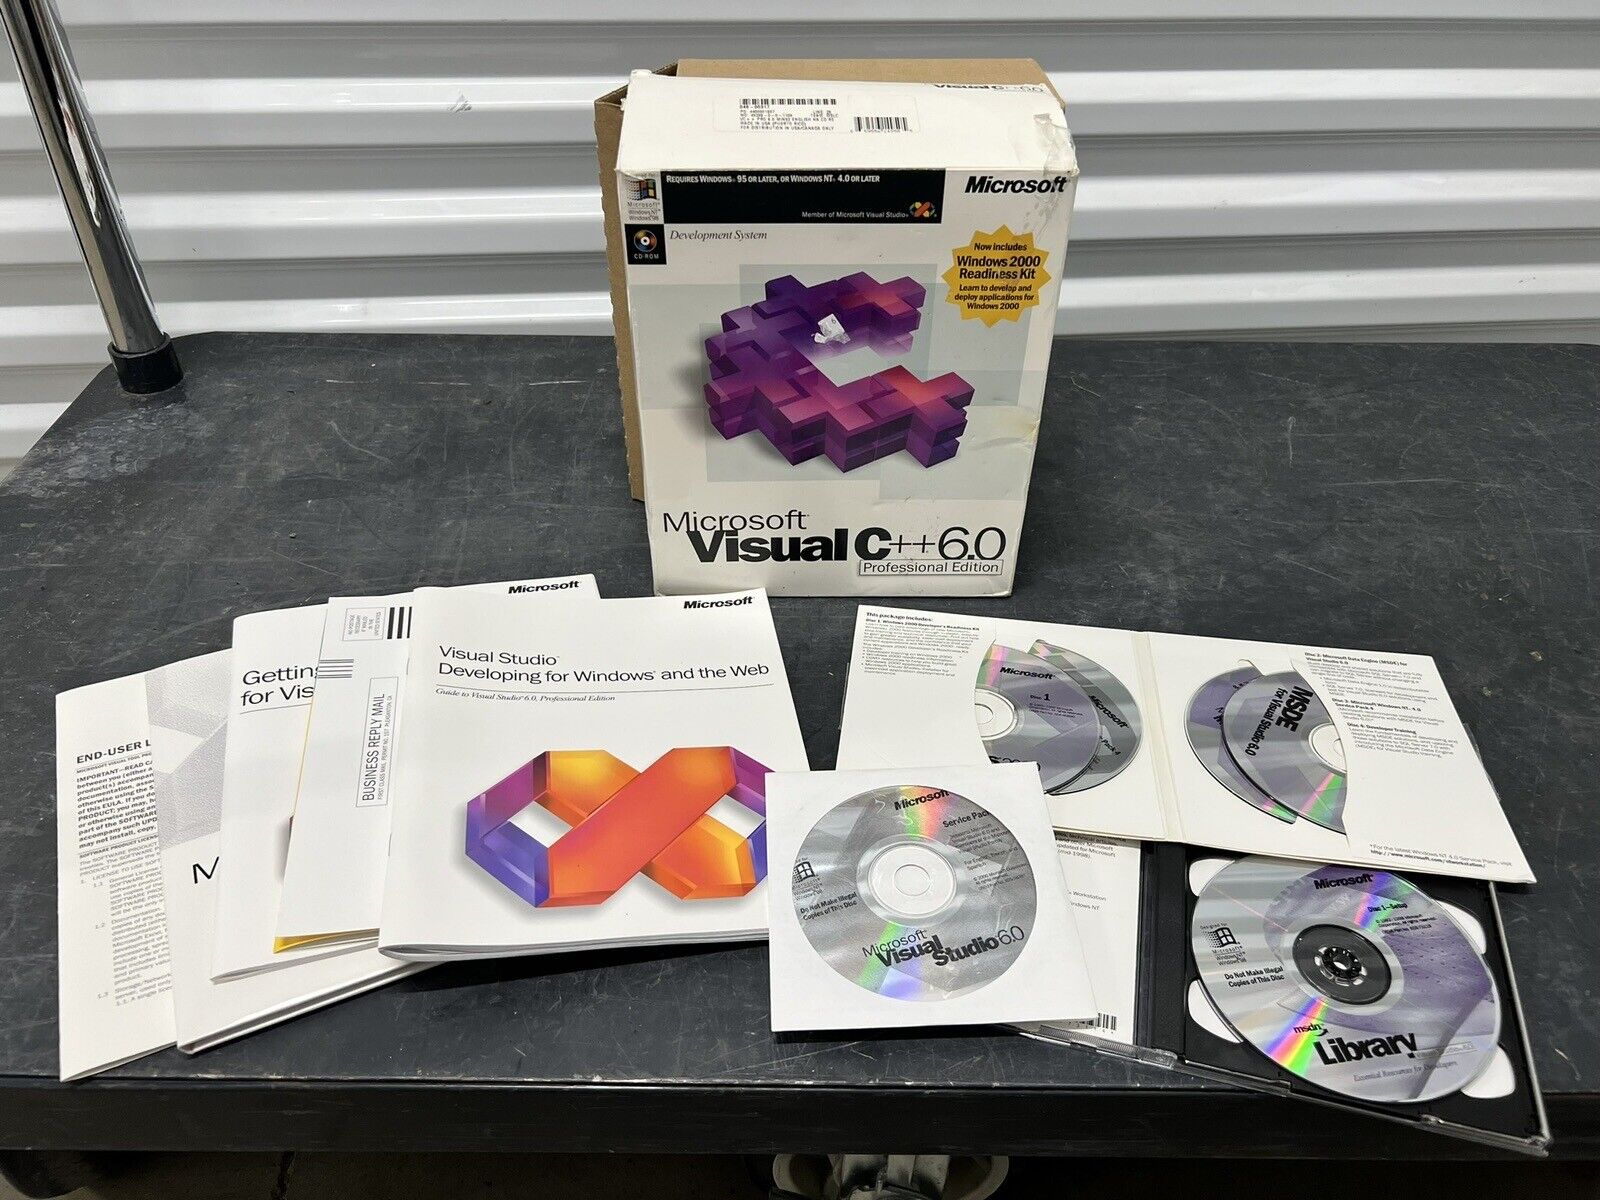 Microsoft Visual C++ 6.0 Professional Edition